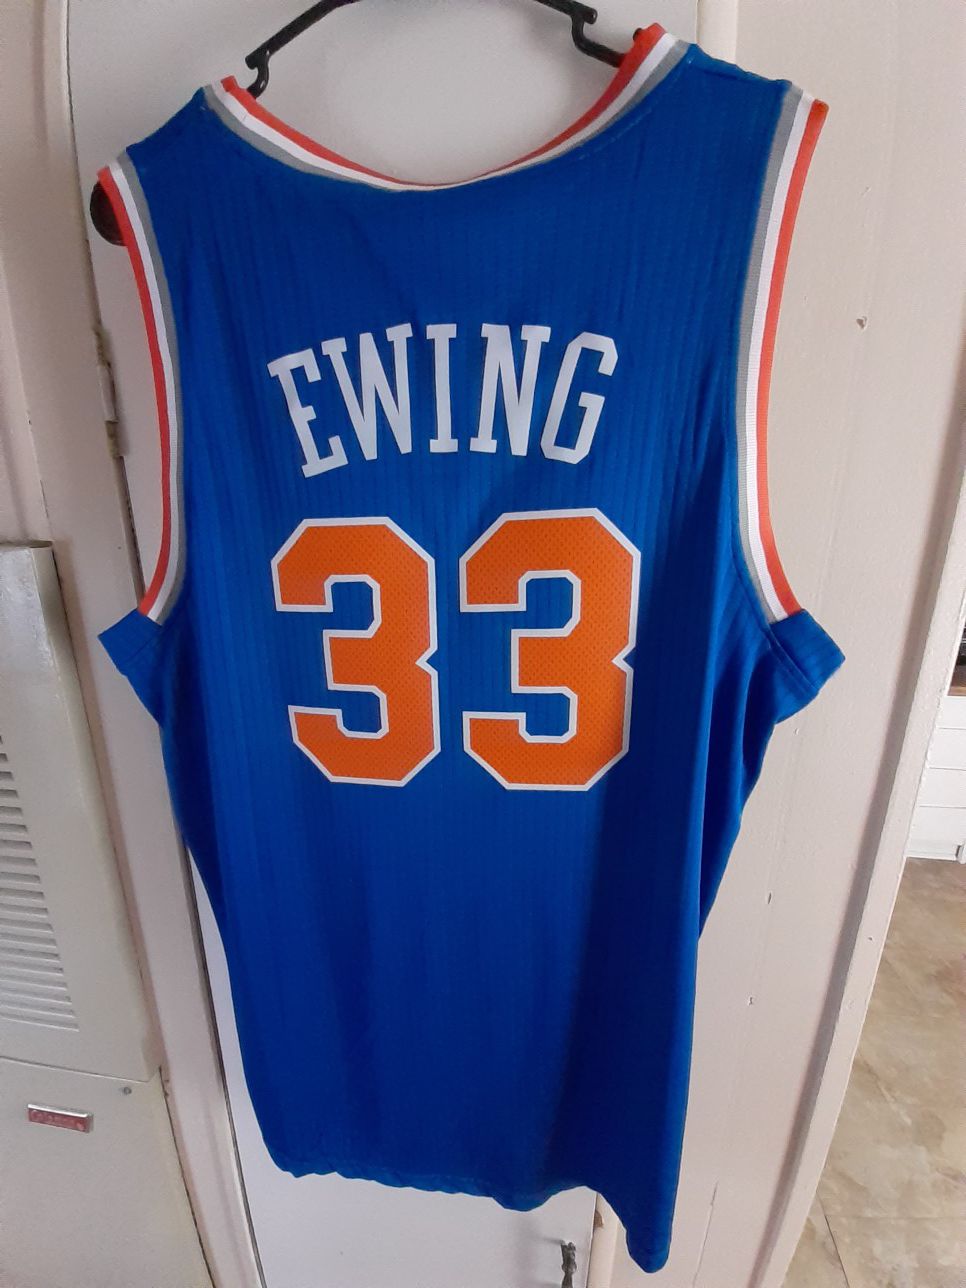 Patrick Ewing Knicks jersey